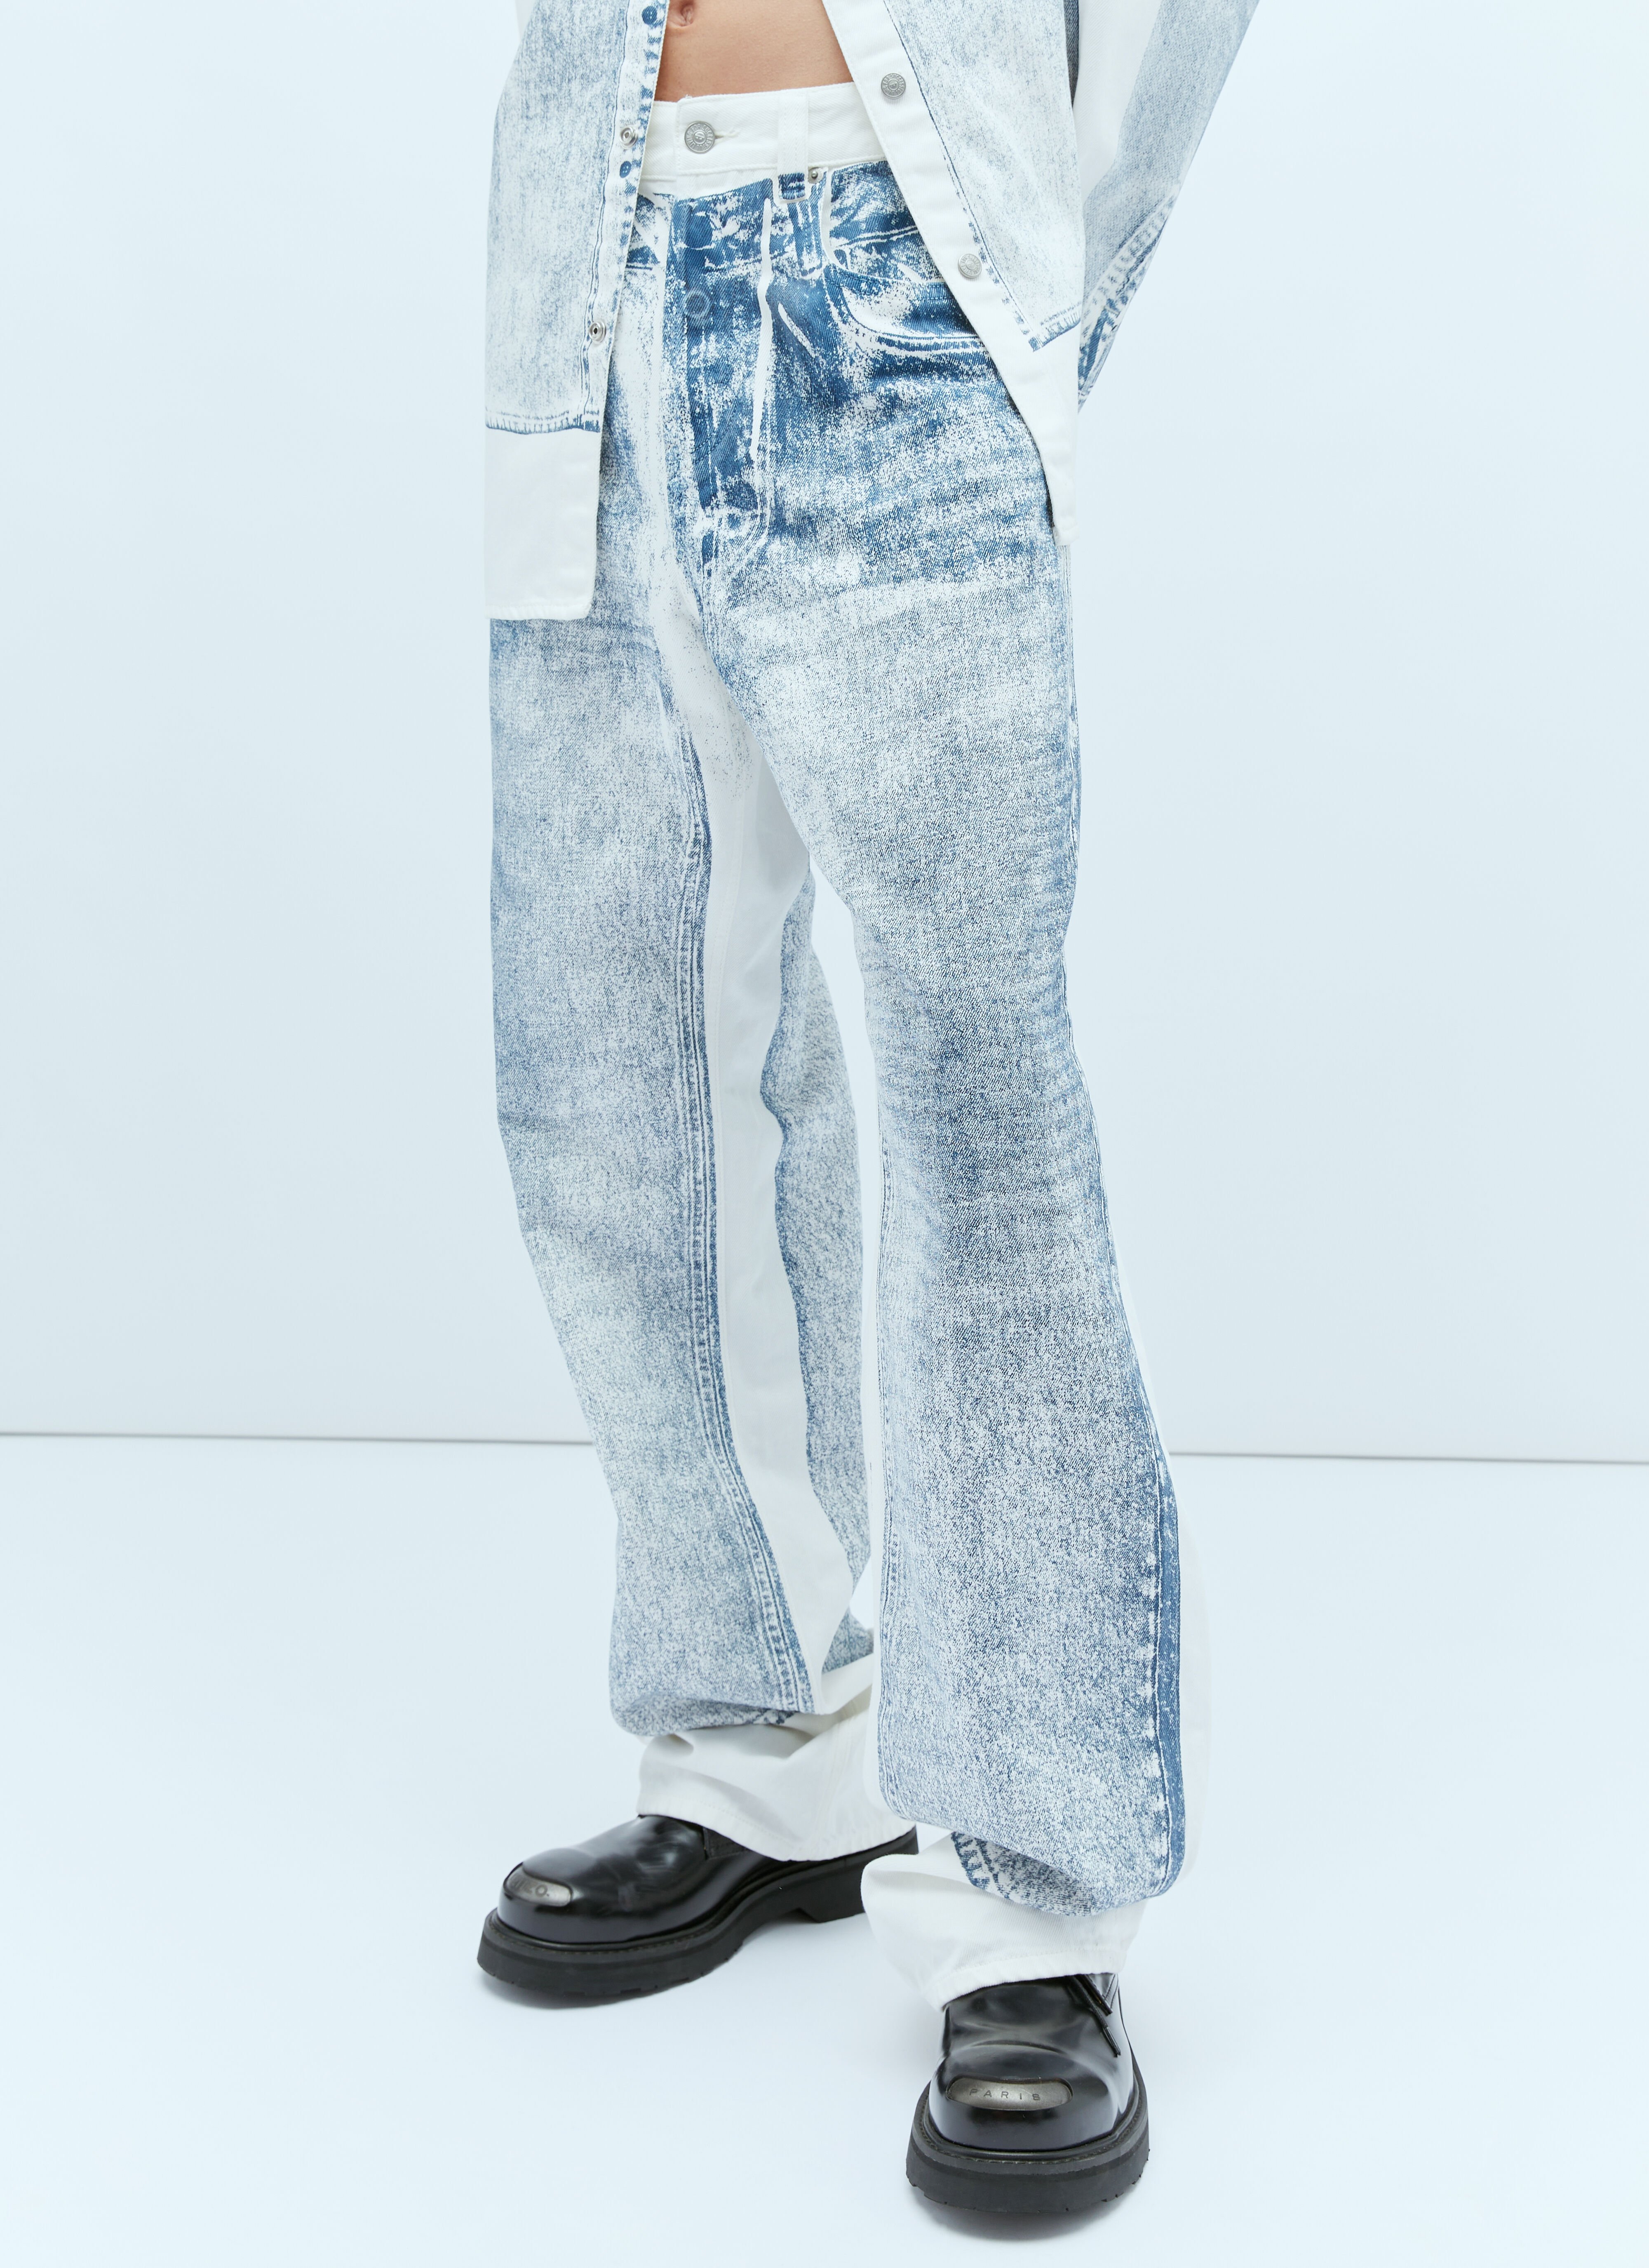 Miu Miu 2001 D-Macro 牛仔裤 蓝色 miu0355001